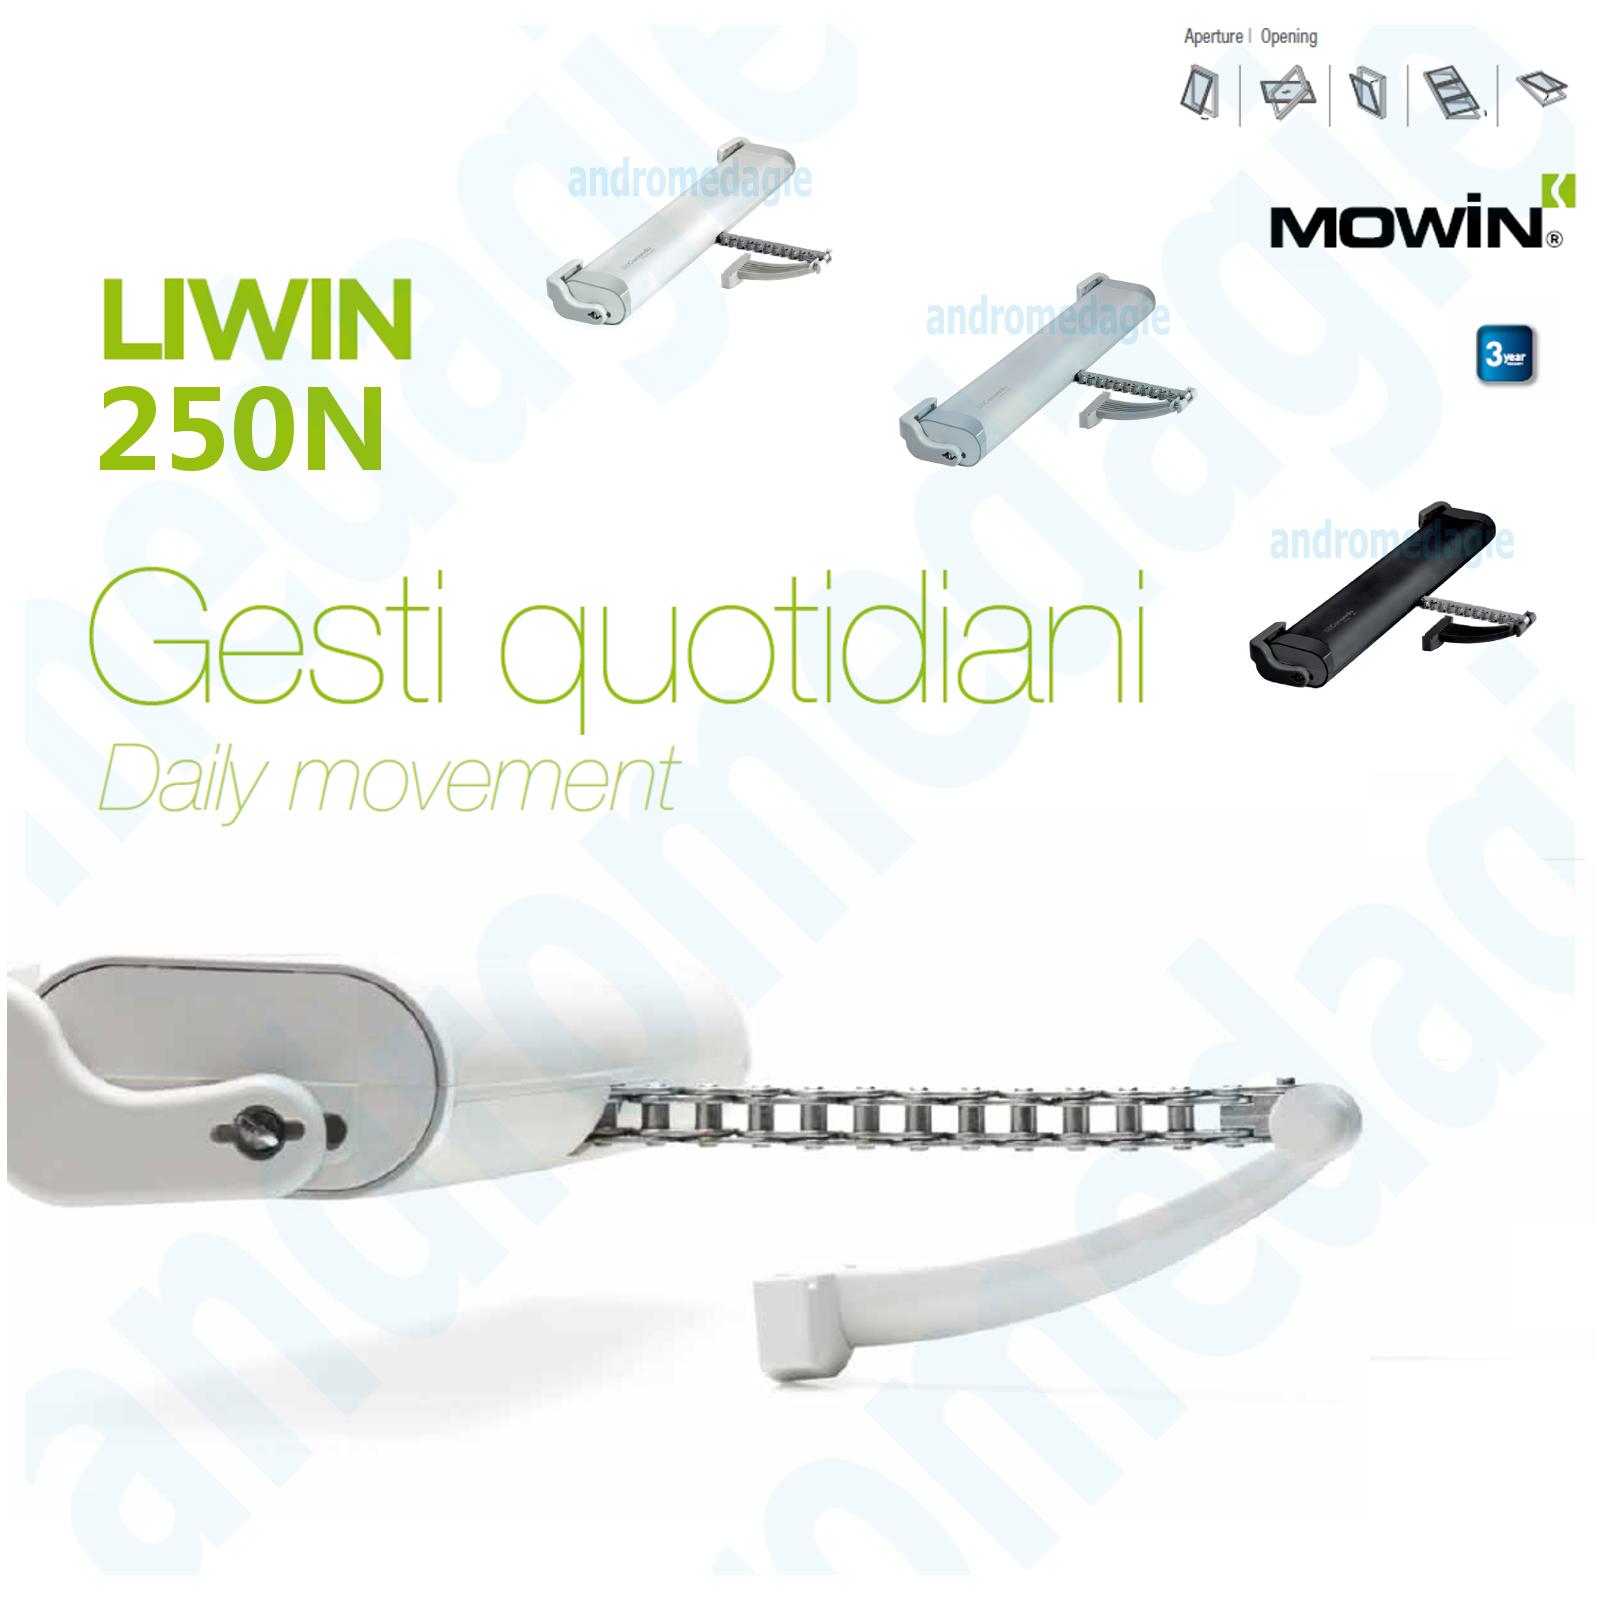 LIWIN 250N 230V